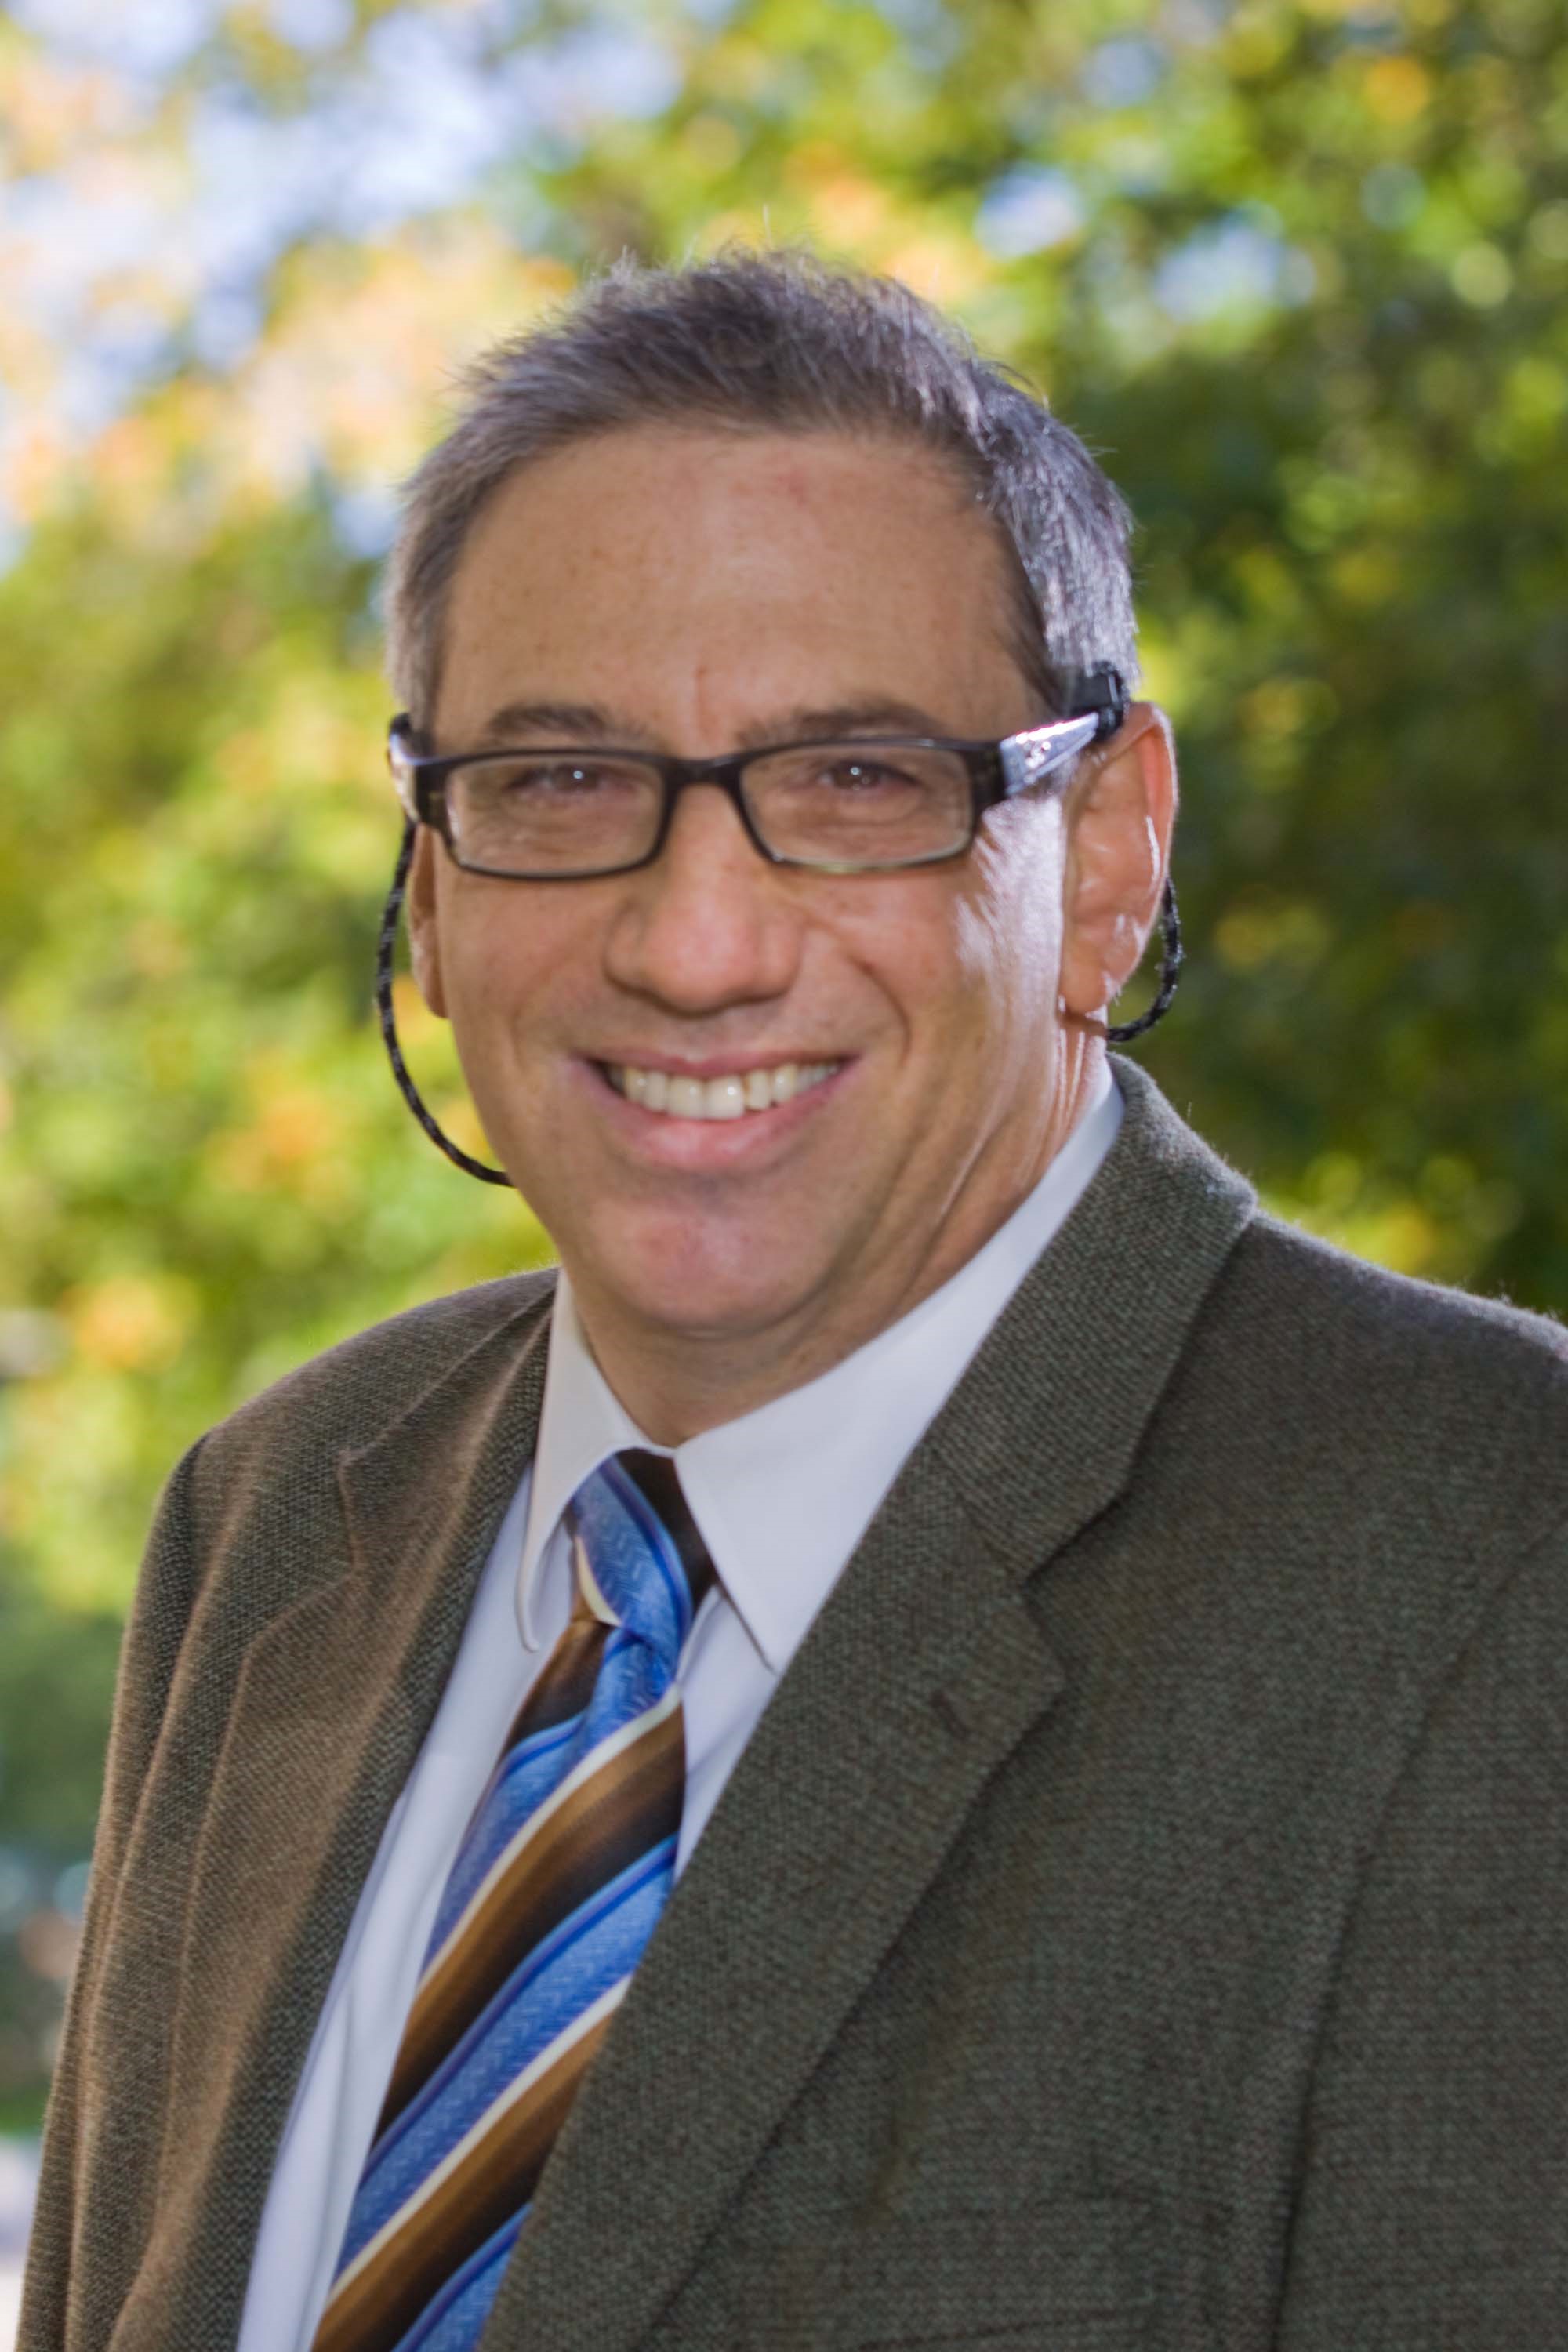 Dr. Brian Horowitz